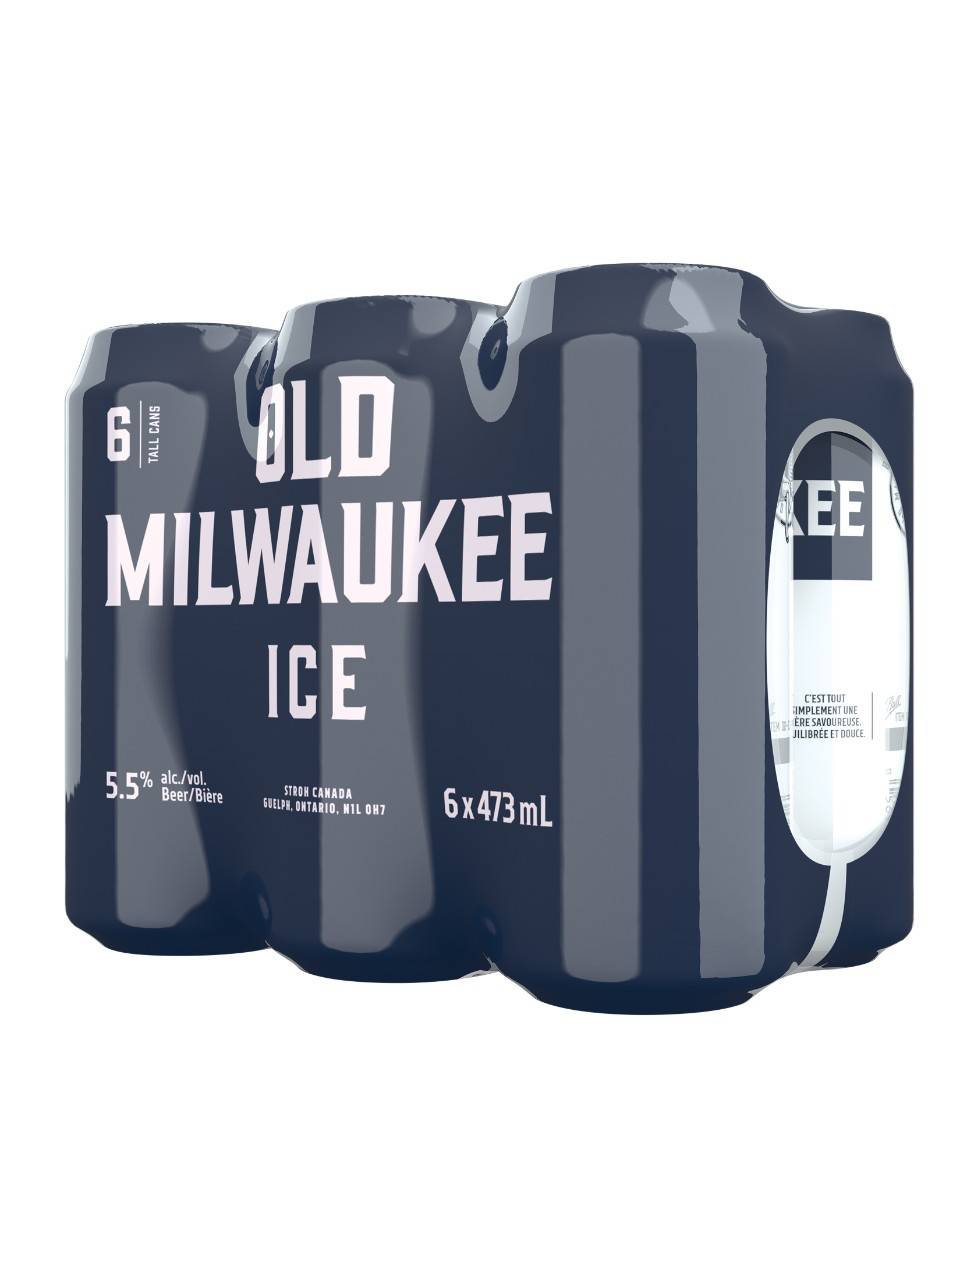 Old Milwaukee Ice Beer